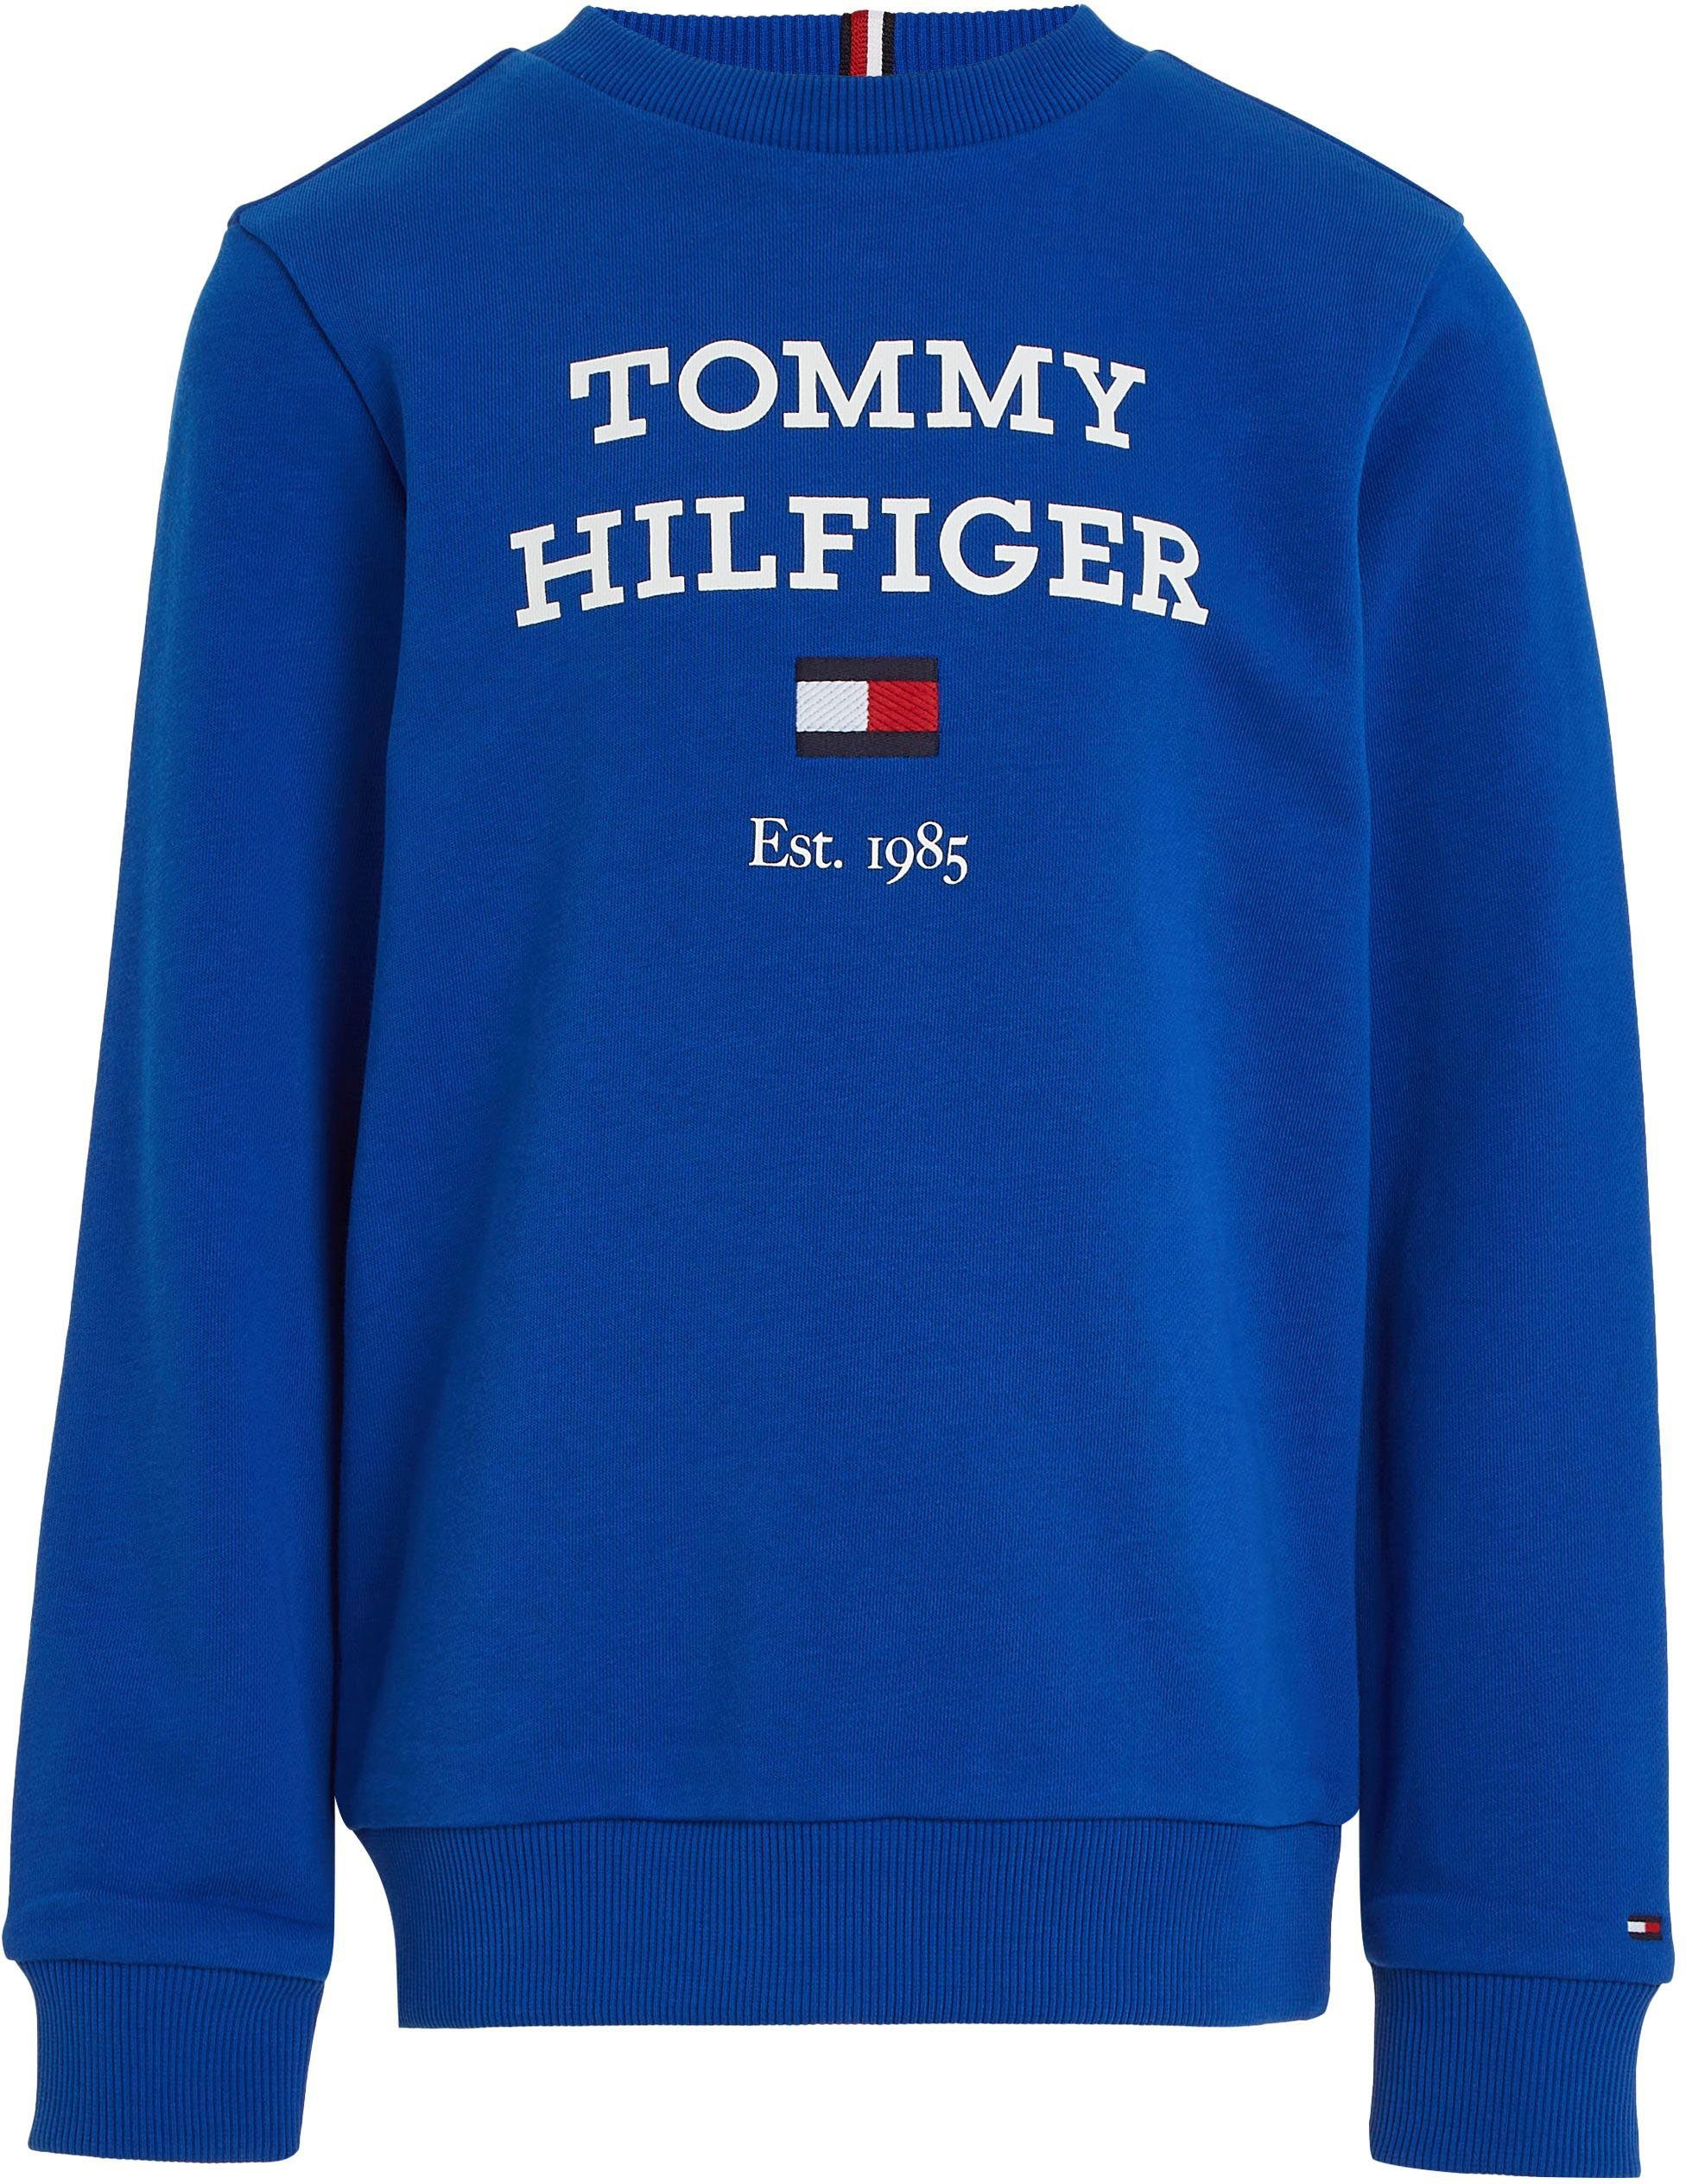 TH Sweatshirt Logo großem blue SWEATSHIRT ultra Tommy mit LOGO Hilfiger